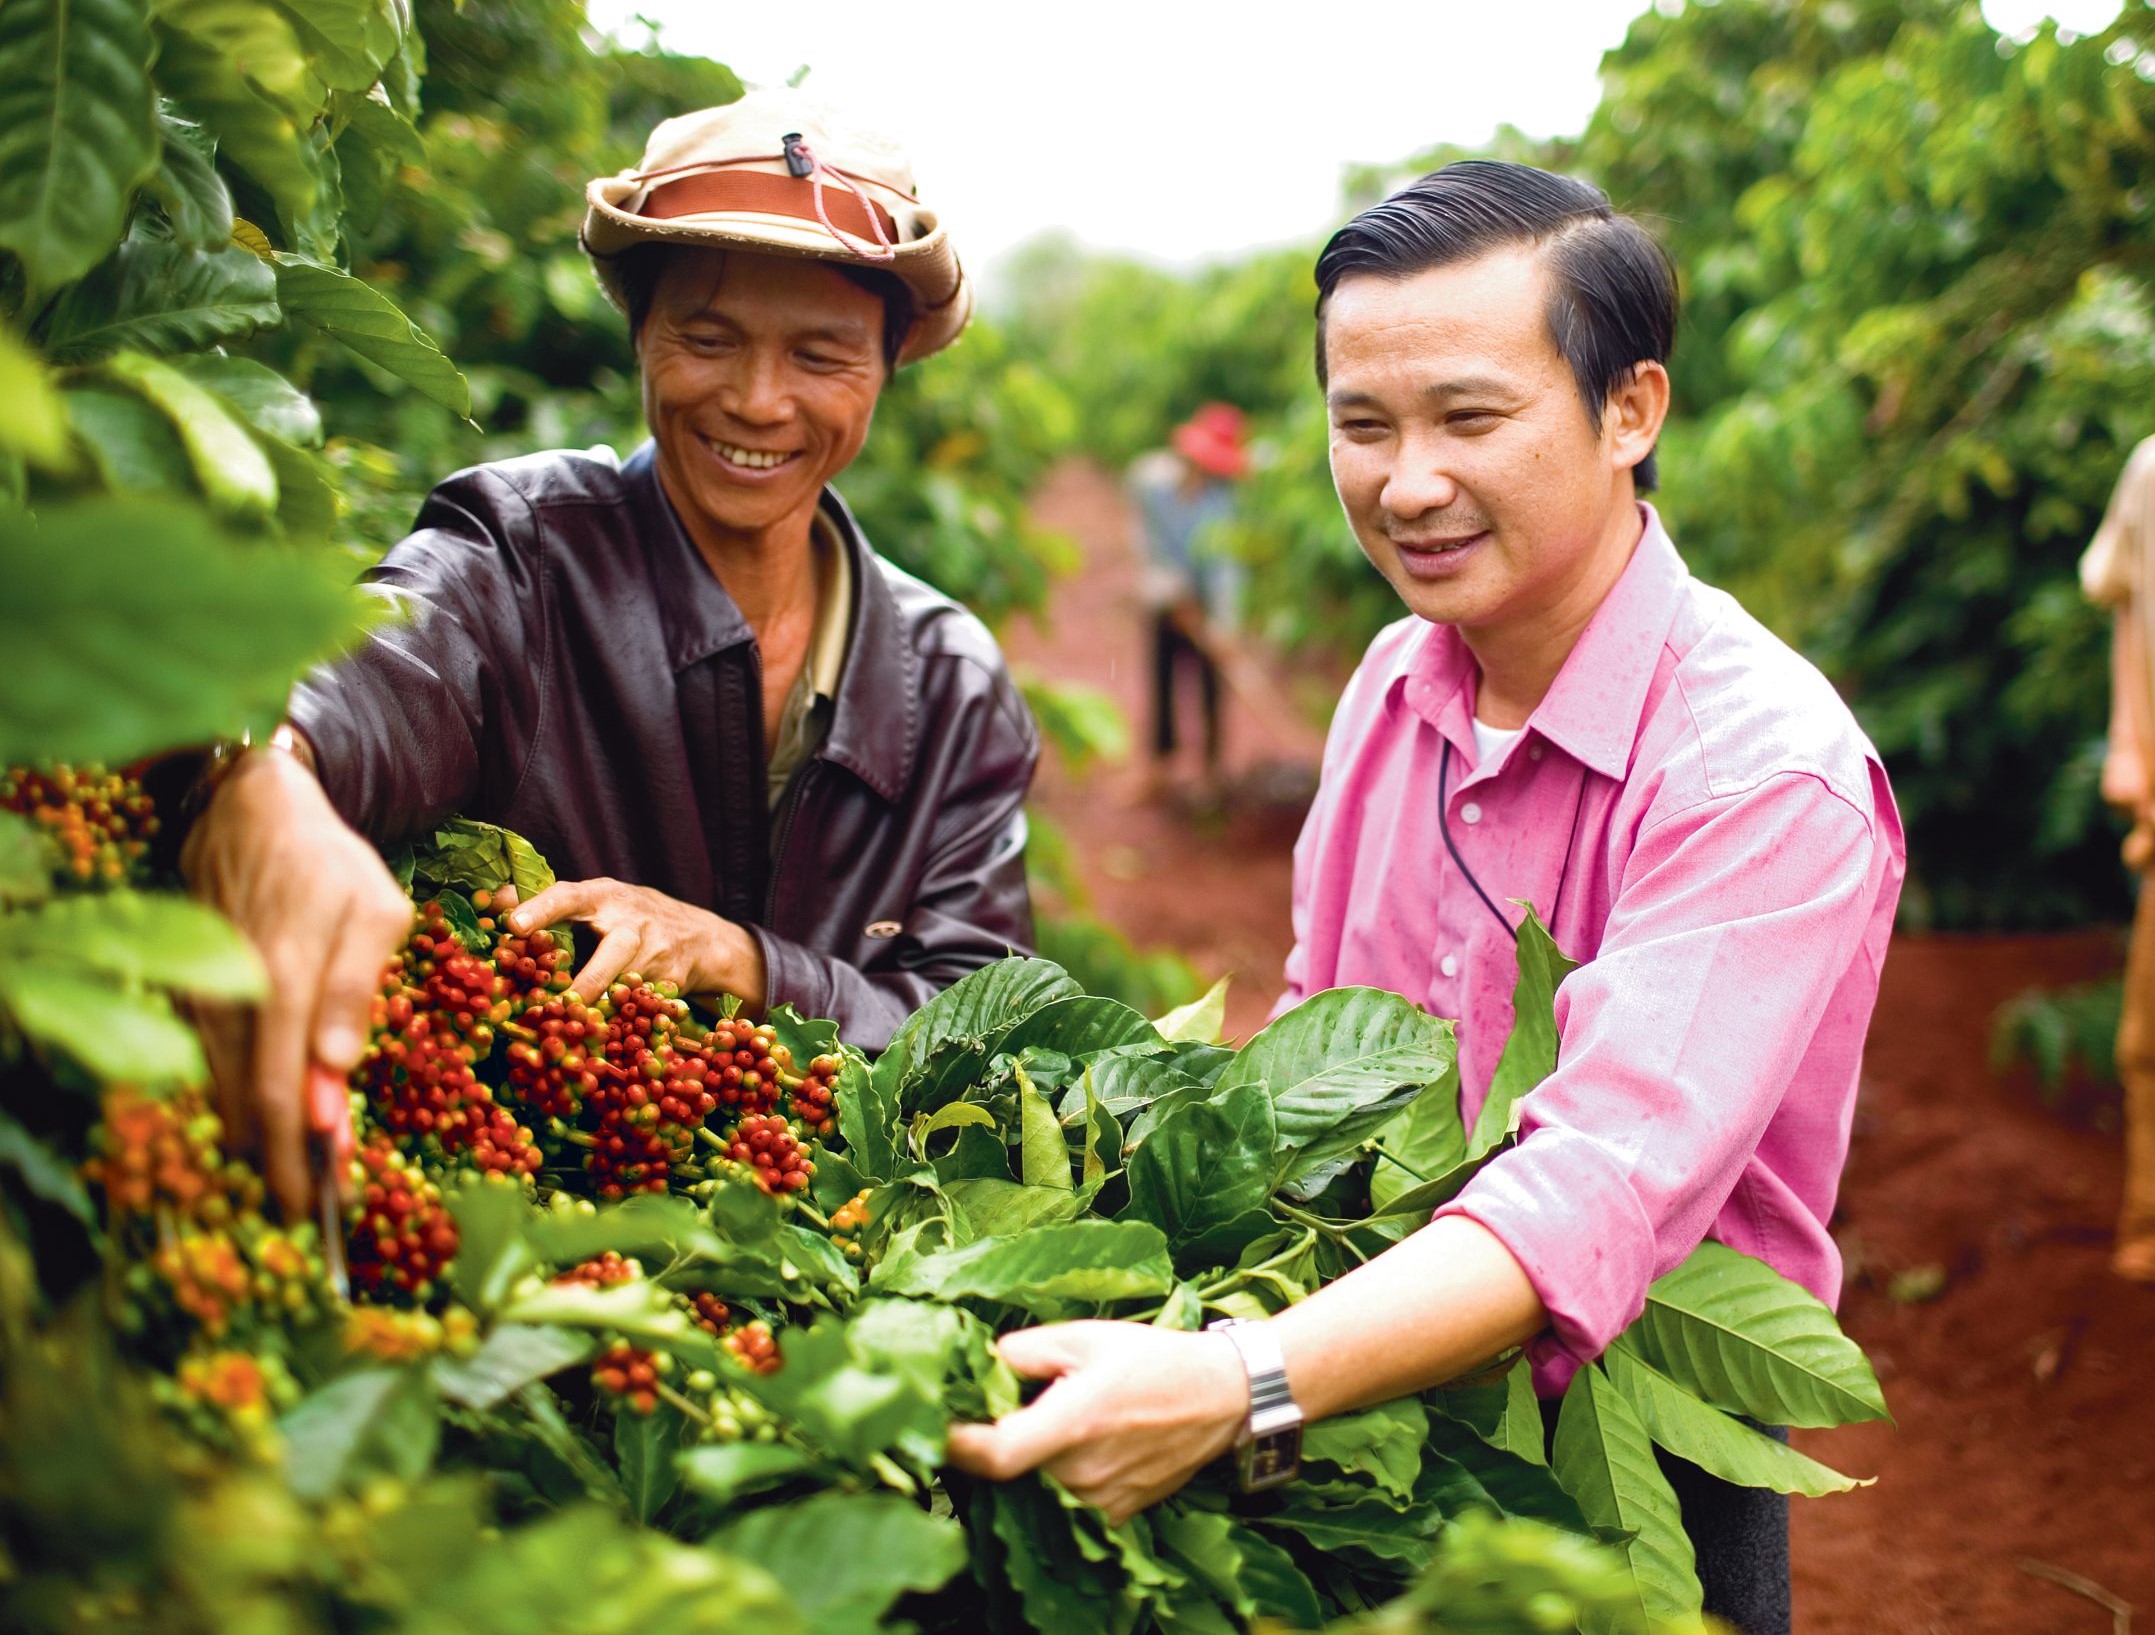 Vietnamese men harvesting coffee beans together